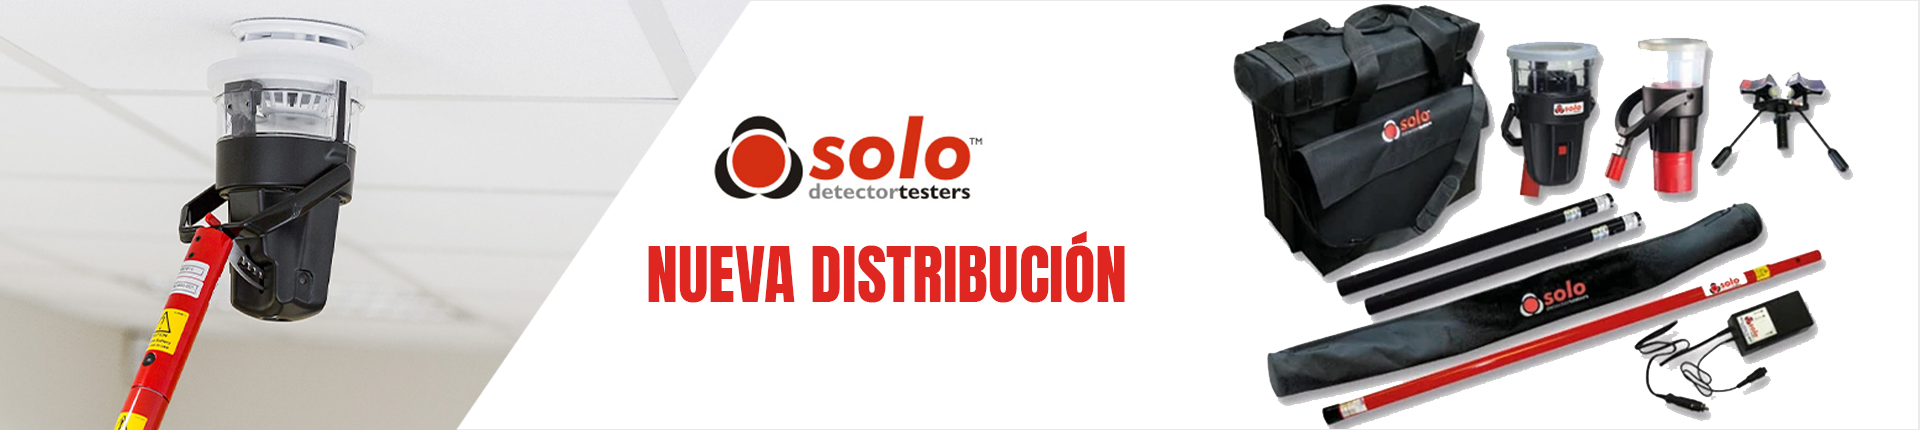 https://bo.contera.pt/fileuploads/Banners/BannersgrandesHomepageESPANHA/Solo-nova-distribuicion-slide.png